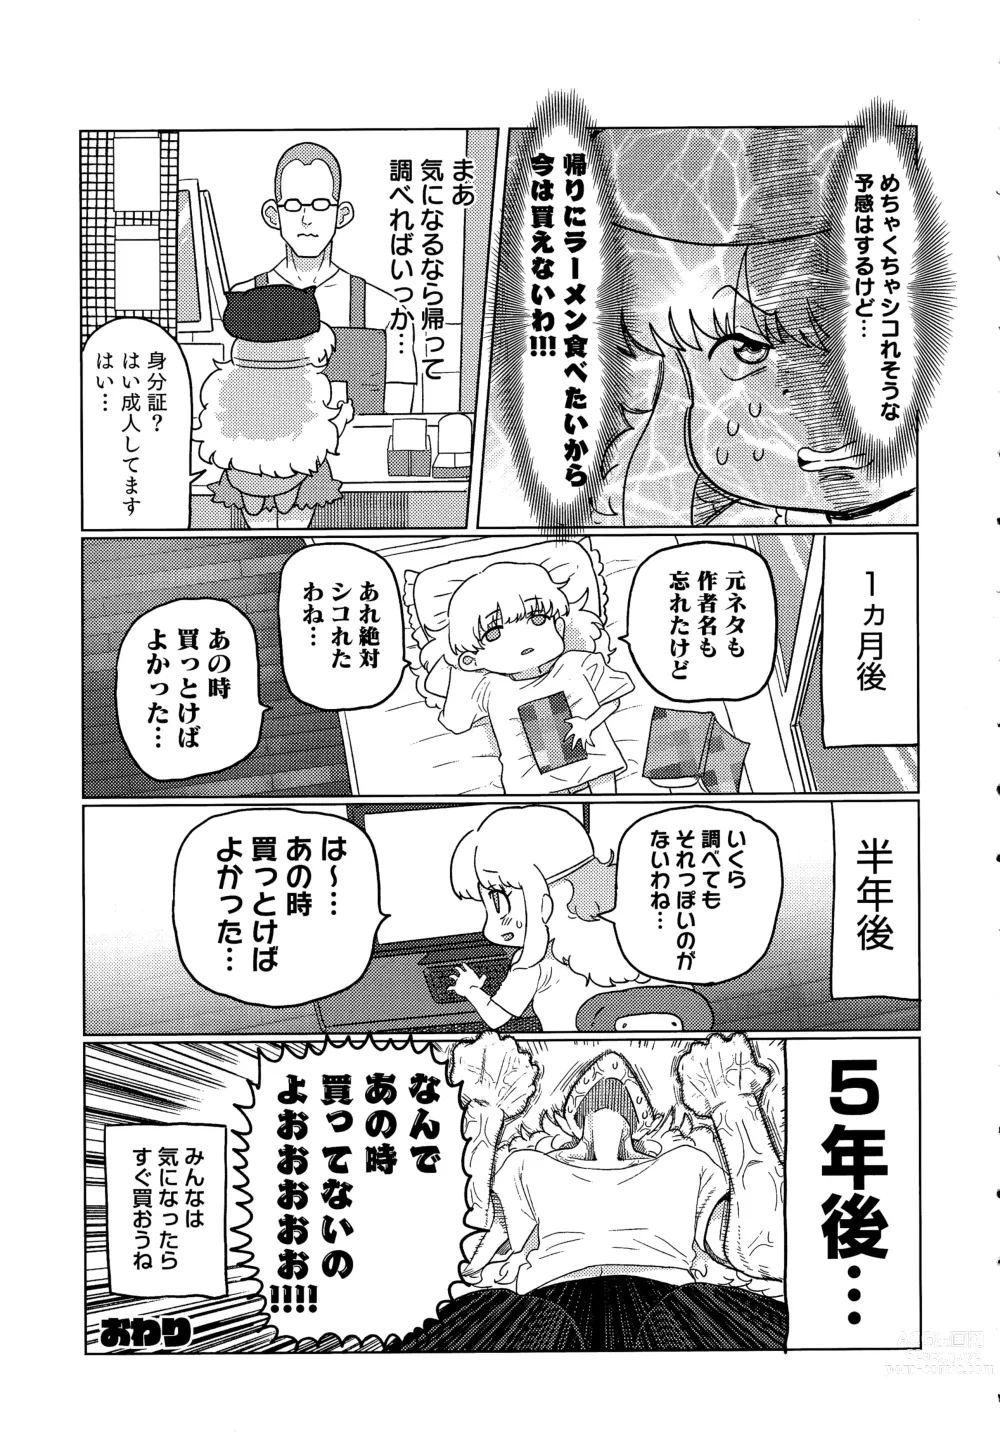 Page 102 of manga HotMilk Festival All Star Comic